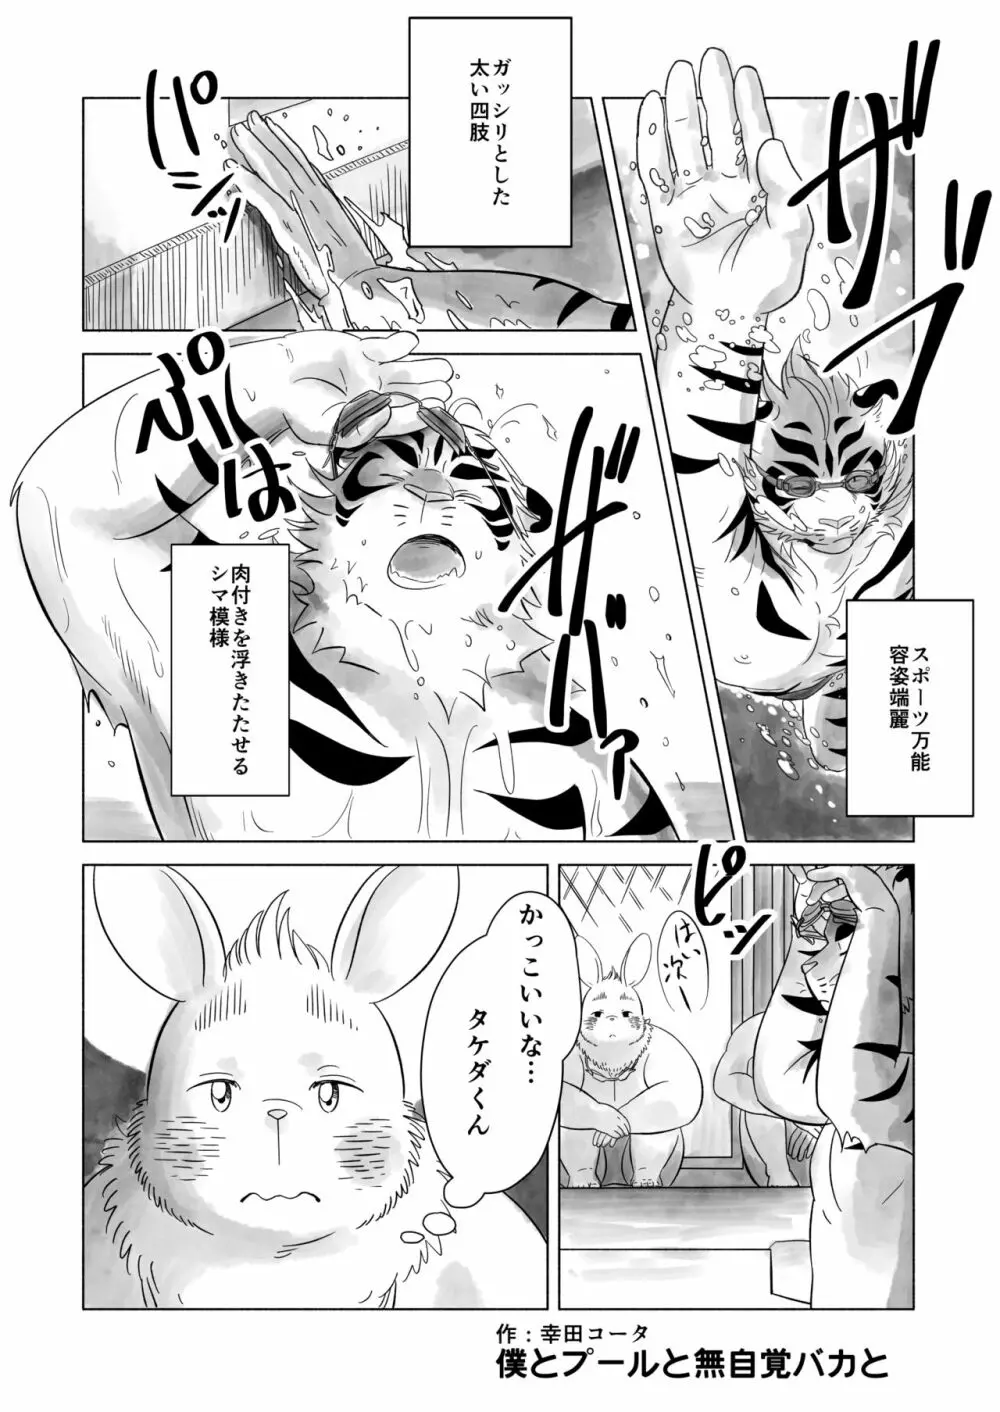 Koda_kota – Bunny and Tiger + extras 2ページ